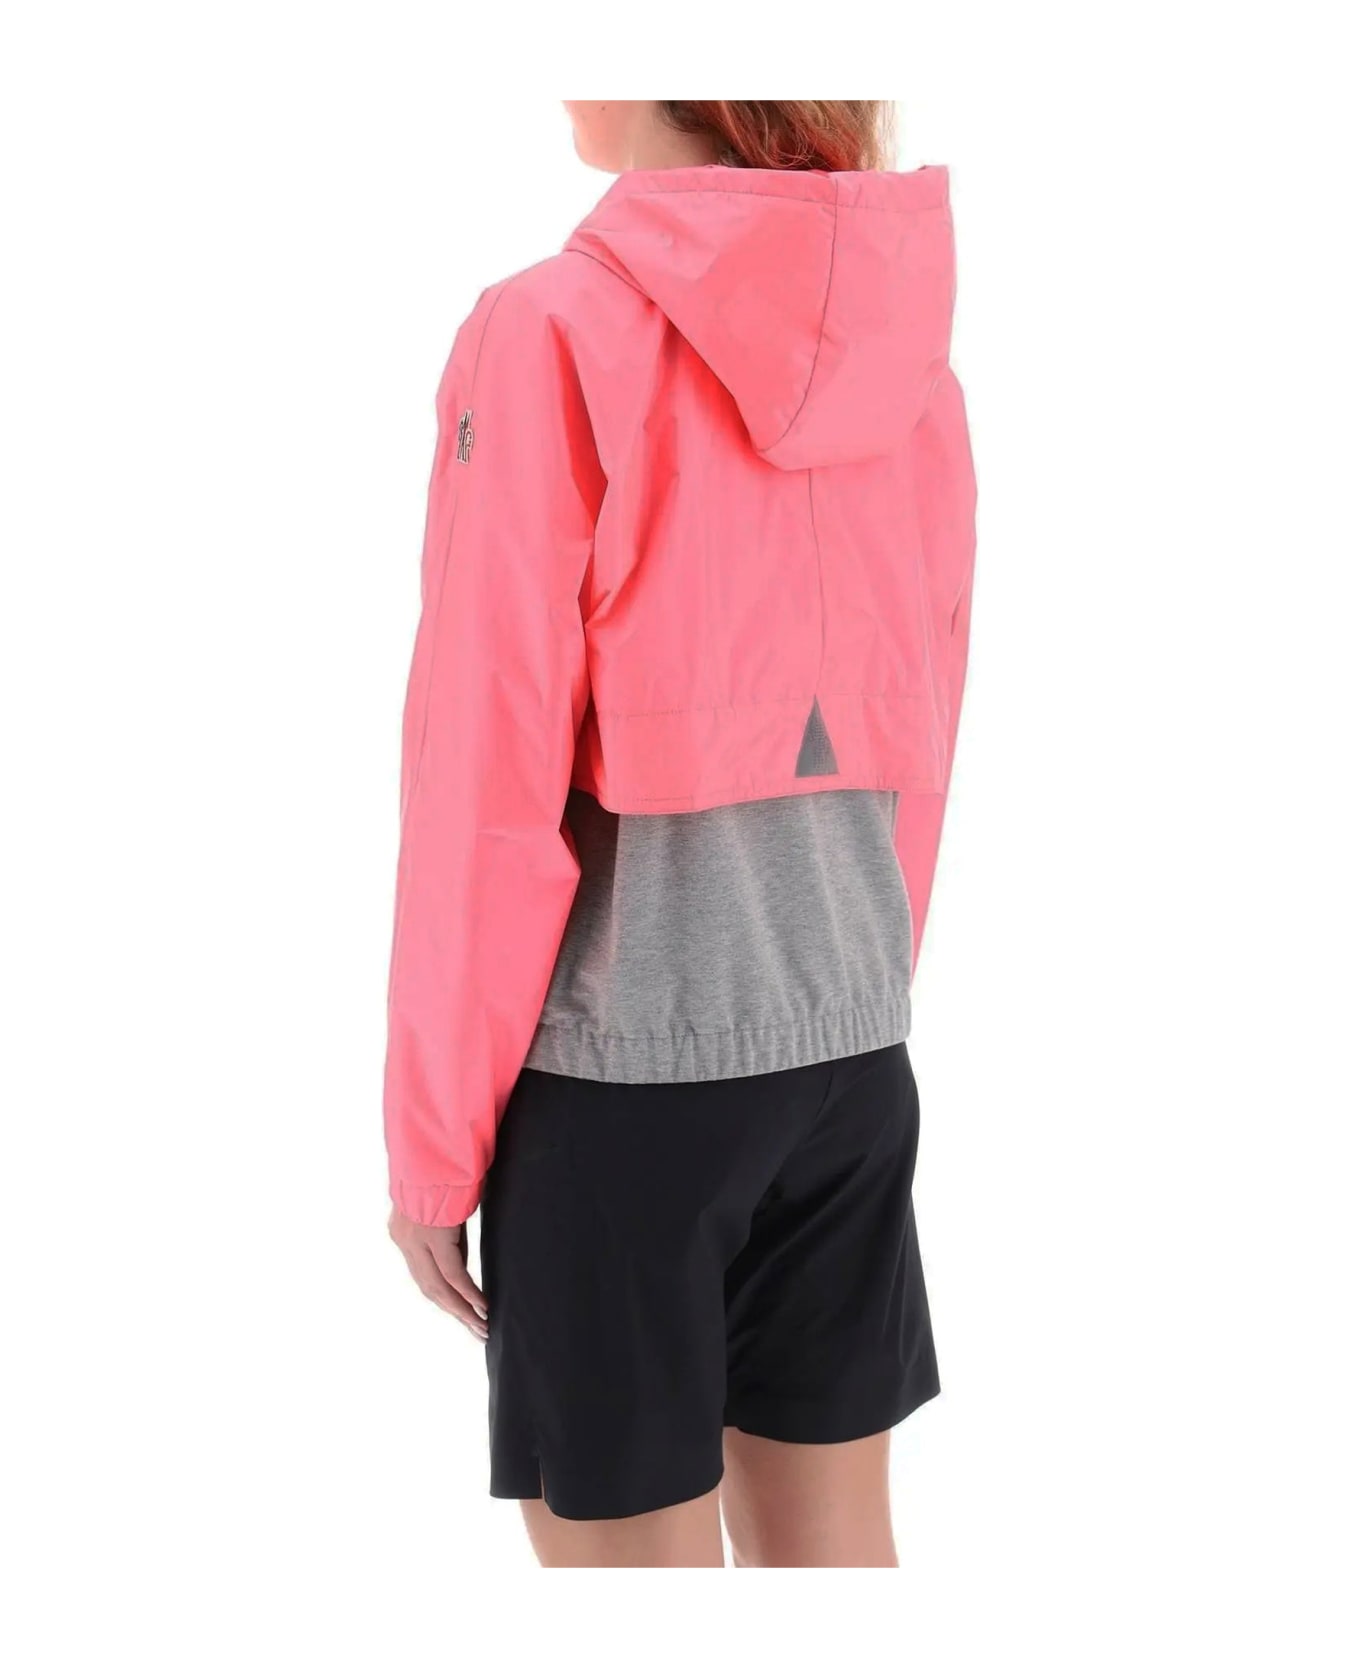 Moncler Grenoble Grenoble Hoodie Jacket - Pink